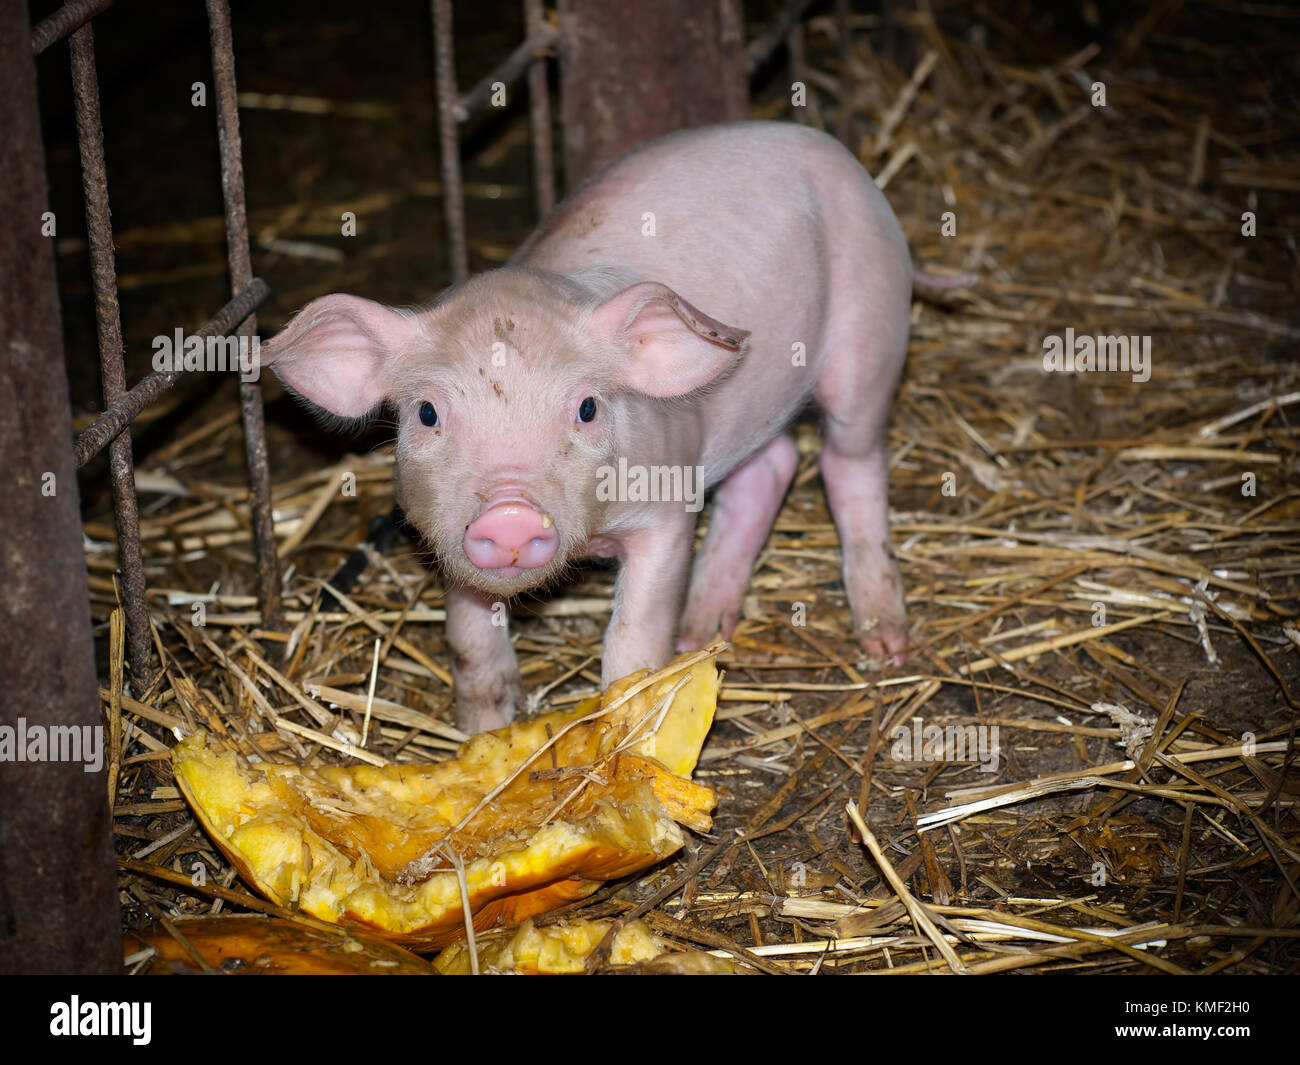 Young pig on a farm eats a pumpkin. Stock Photo